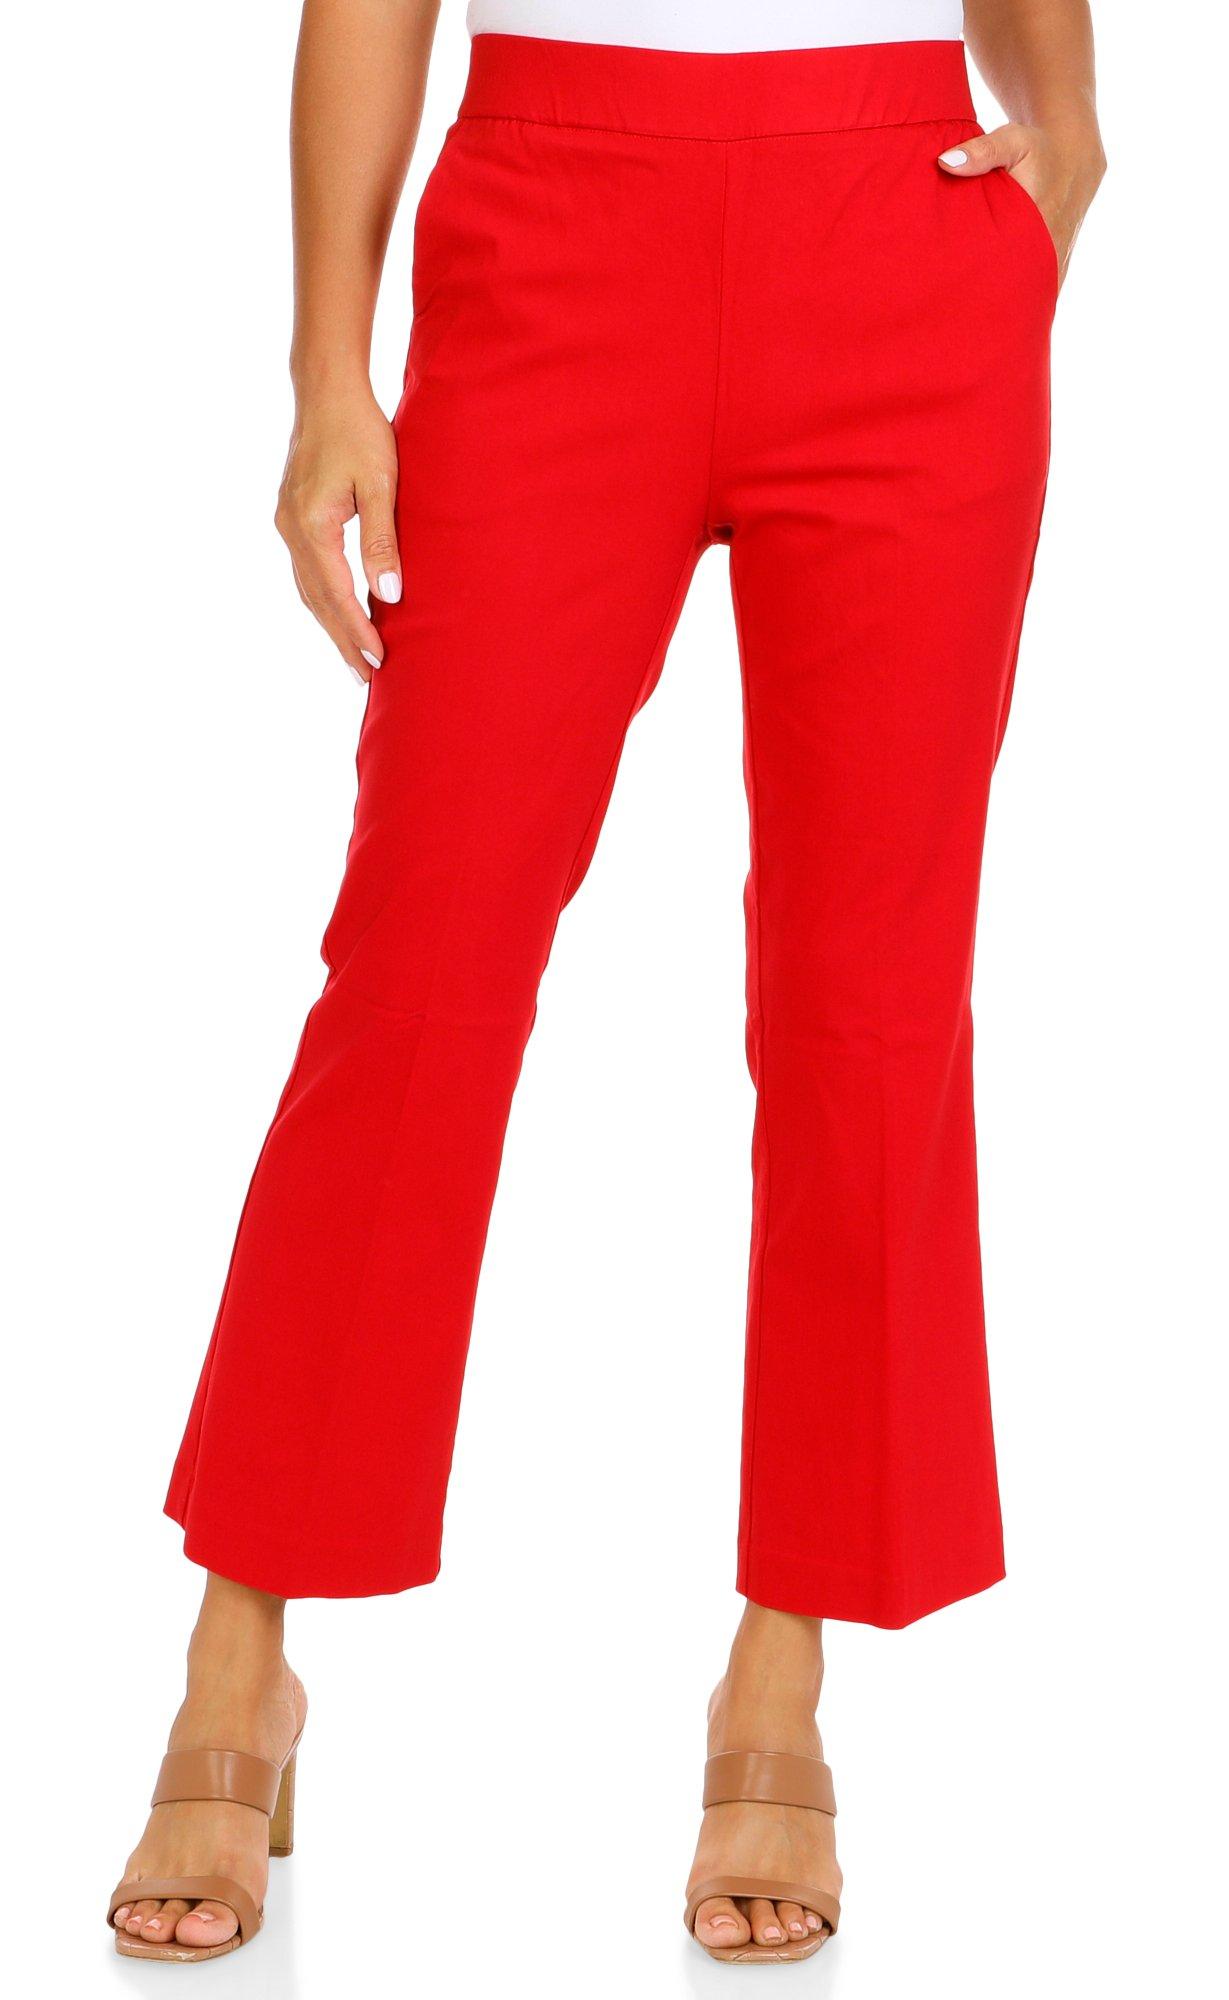 Rafaella Women's Plus Size Pull-On Capri Pants - Comfort Fit in